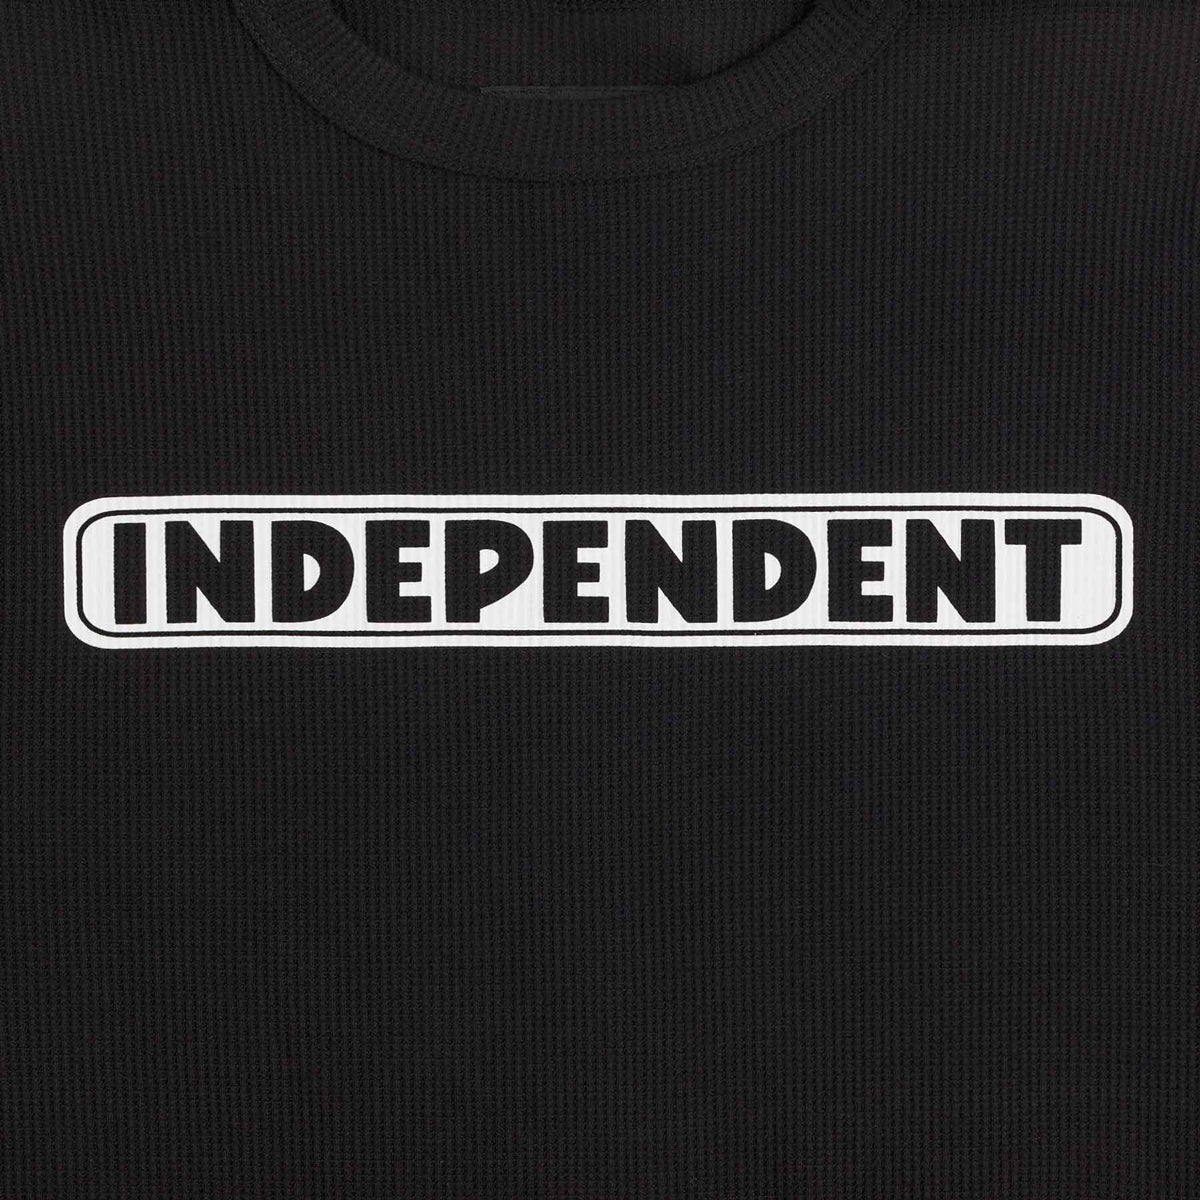 Independent Bar Logo Long Sleeve Thermal Shirt - Black image 2